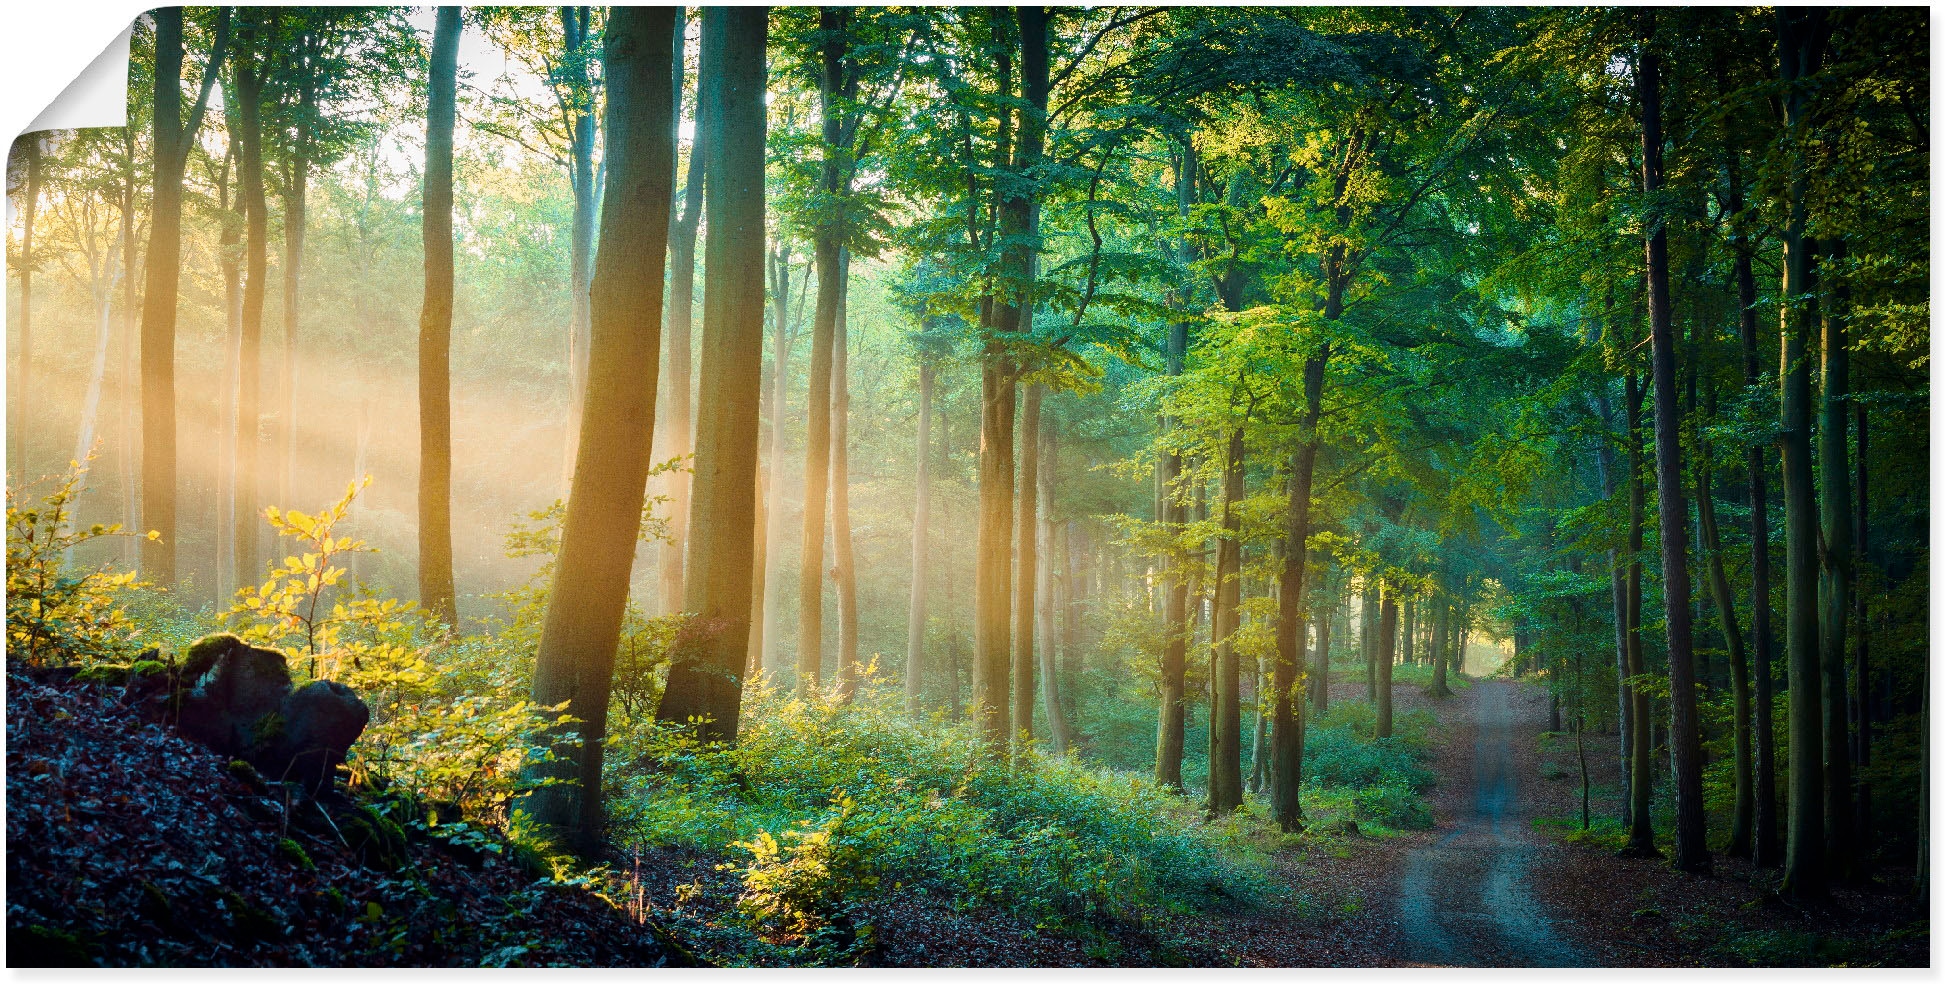 Artland Wandbild »Herbstmorgen im Wald«, Waldbilder, (1 St.), als Alubild,  Leinwandbild, Wandaufkleber oder Poster in versch. Größen online bei OTTO